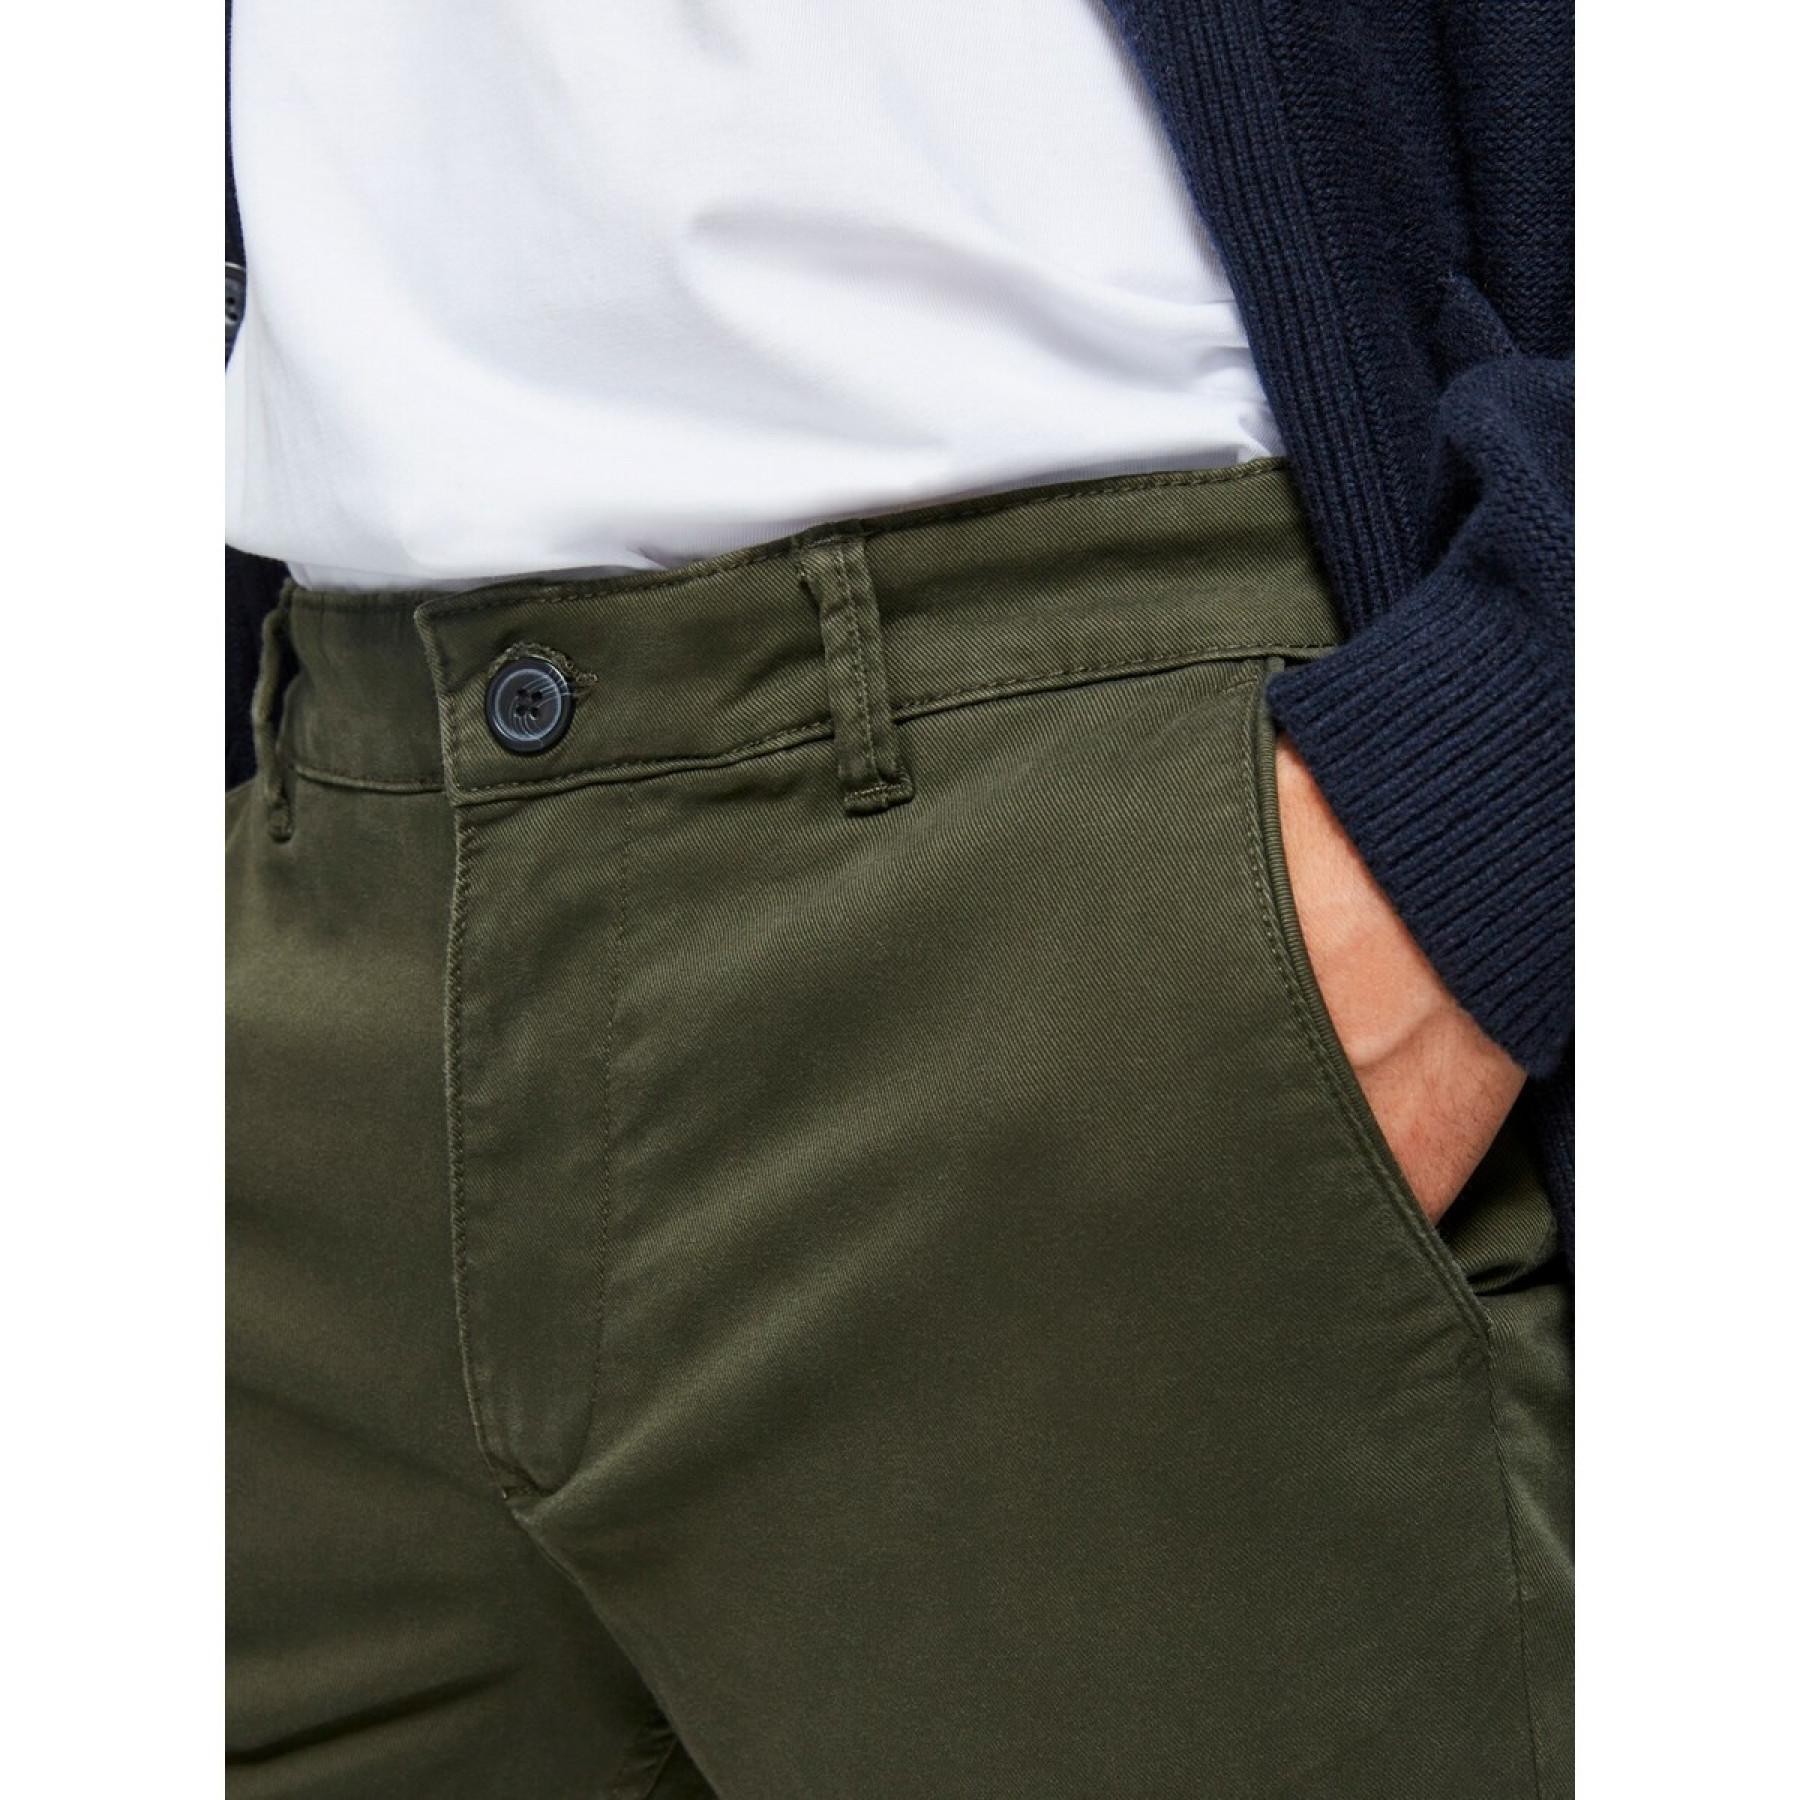 Pantaloni Selected Newparis flex straight